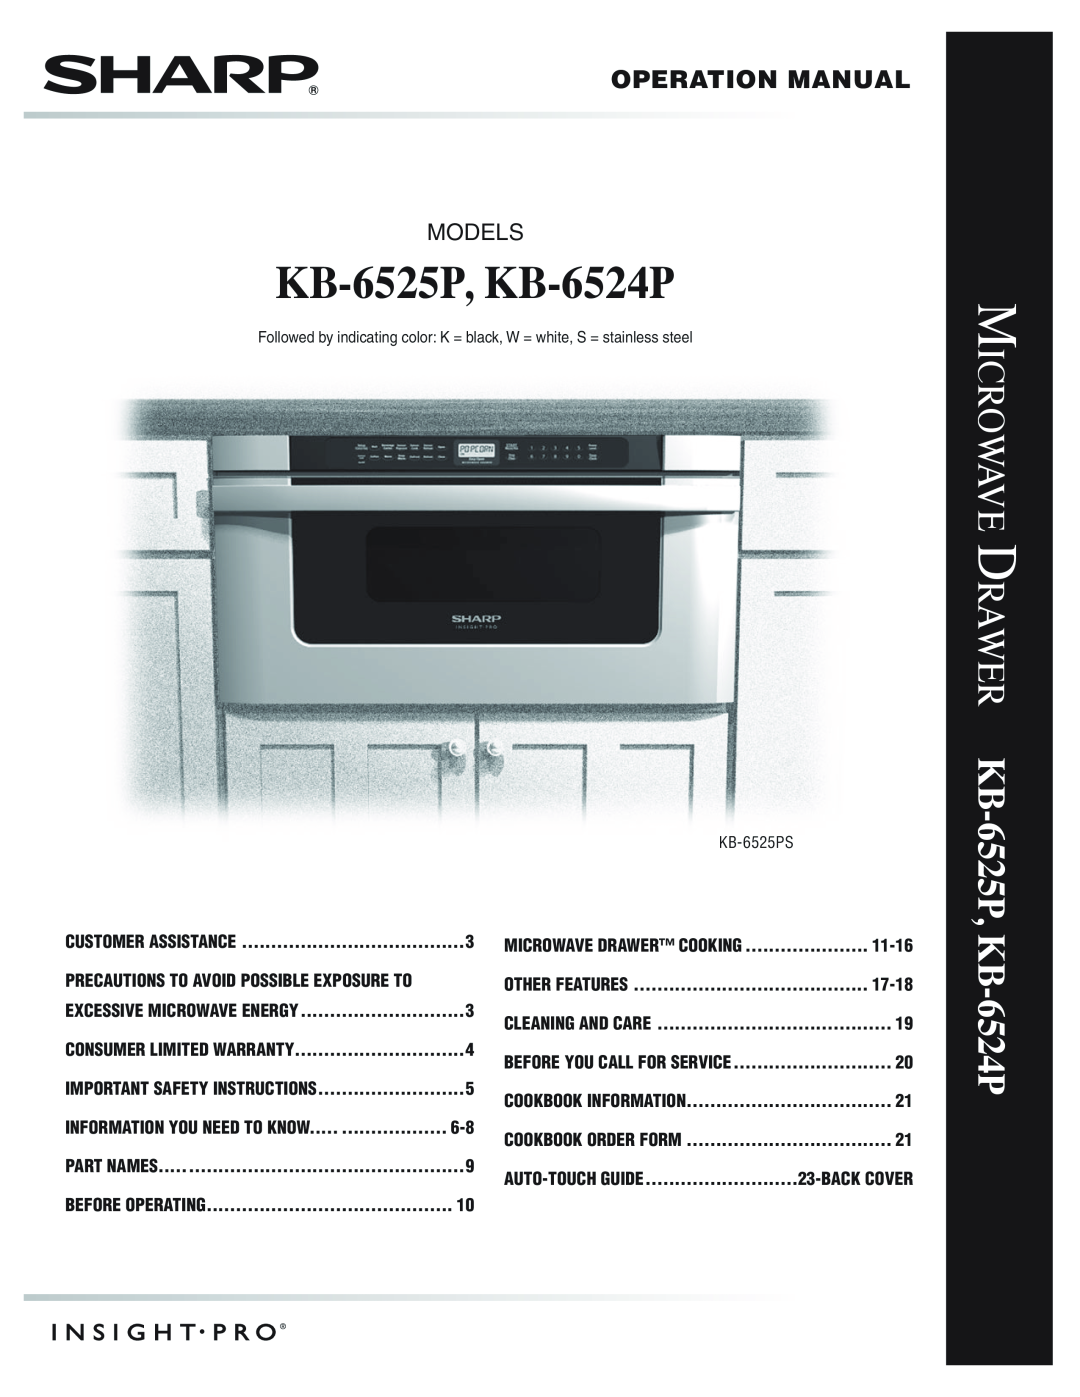 Sharp KB6525PKRB operation manual KB-6525P, KB-6524P, Microwave Drawer KB-6525P, ModelS 